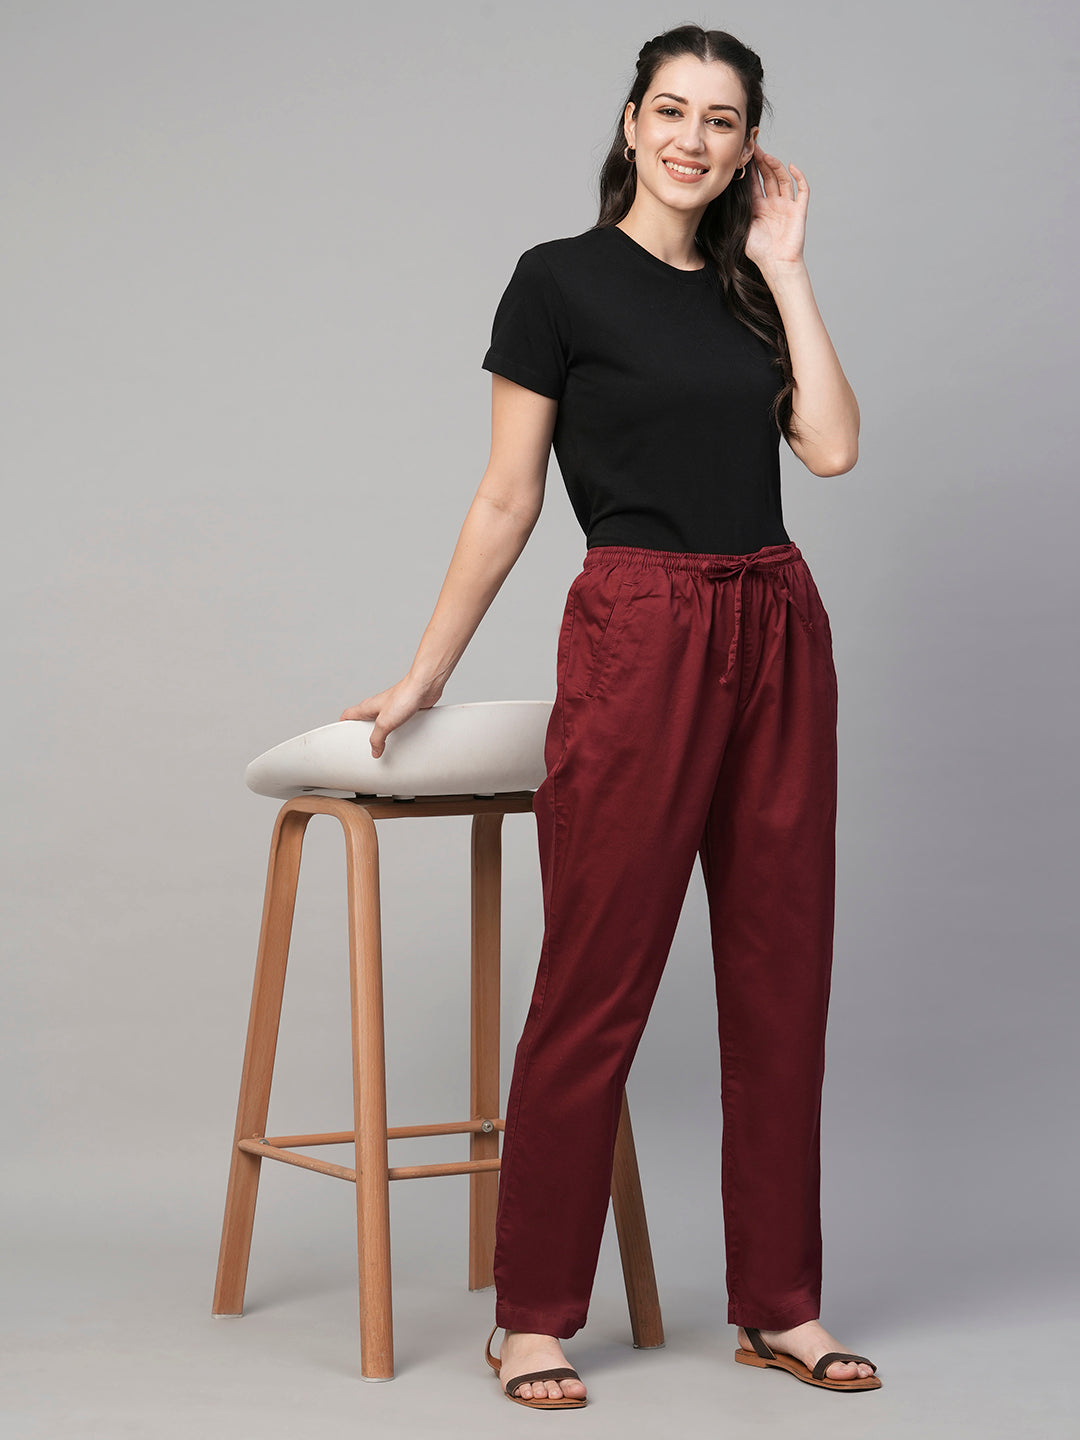 Women's Maroon/Red Cotton Elastane Regular Fit Pant